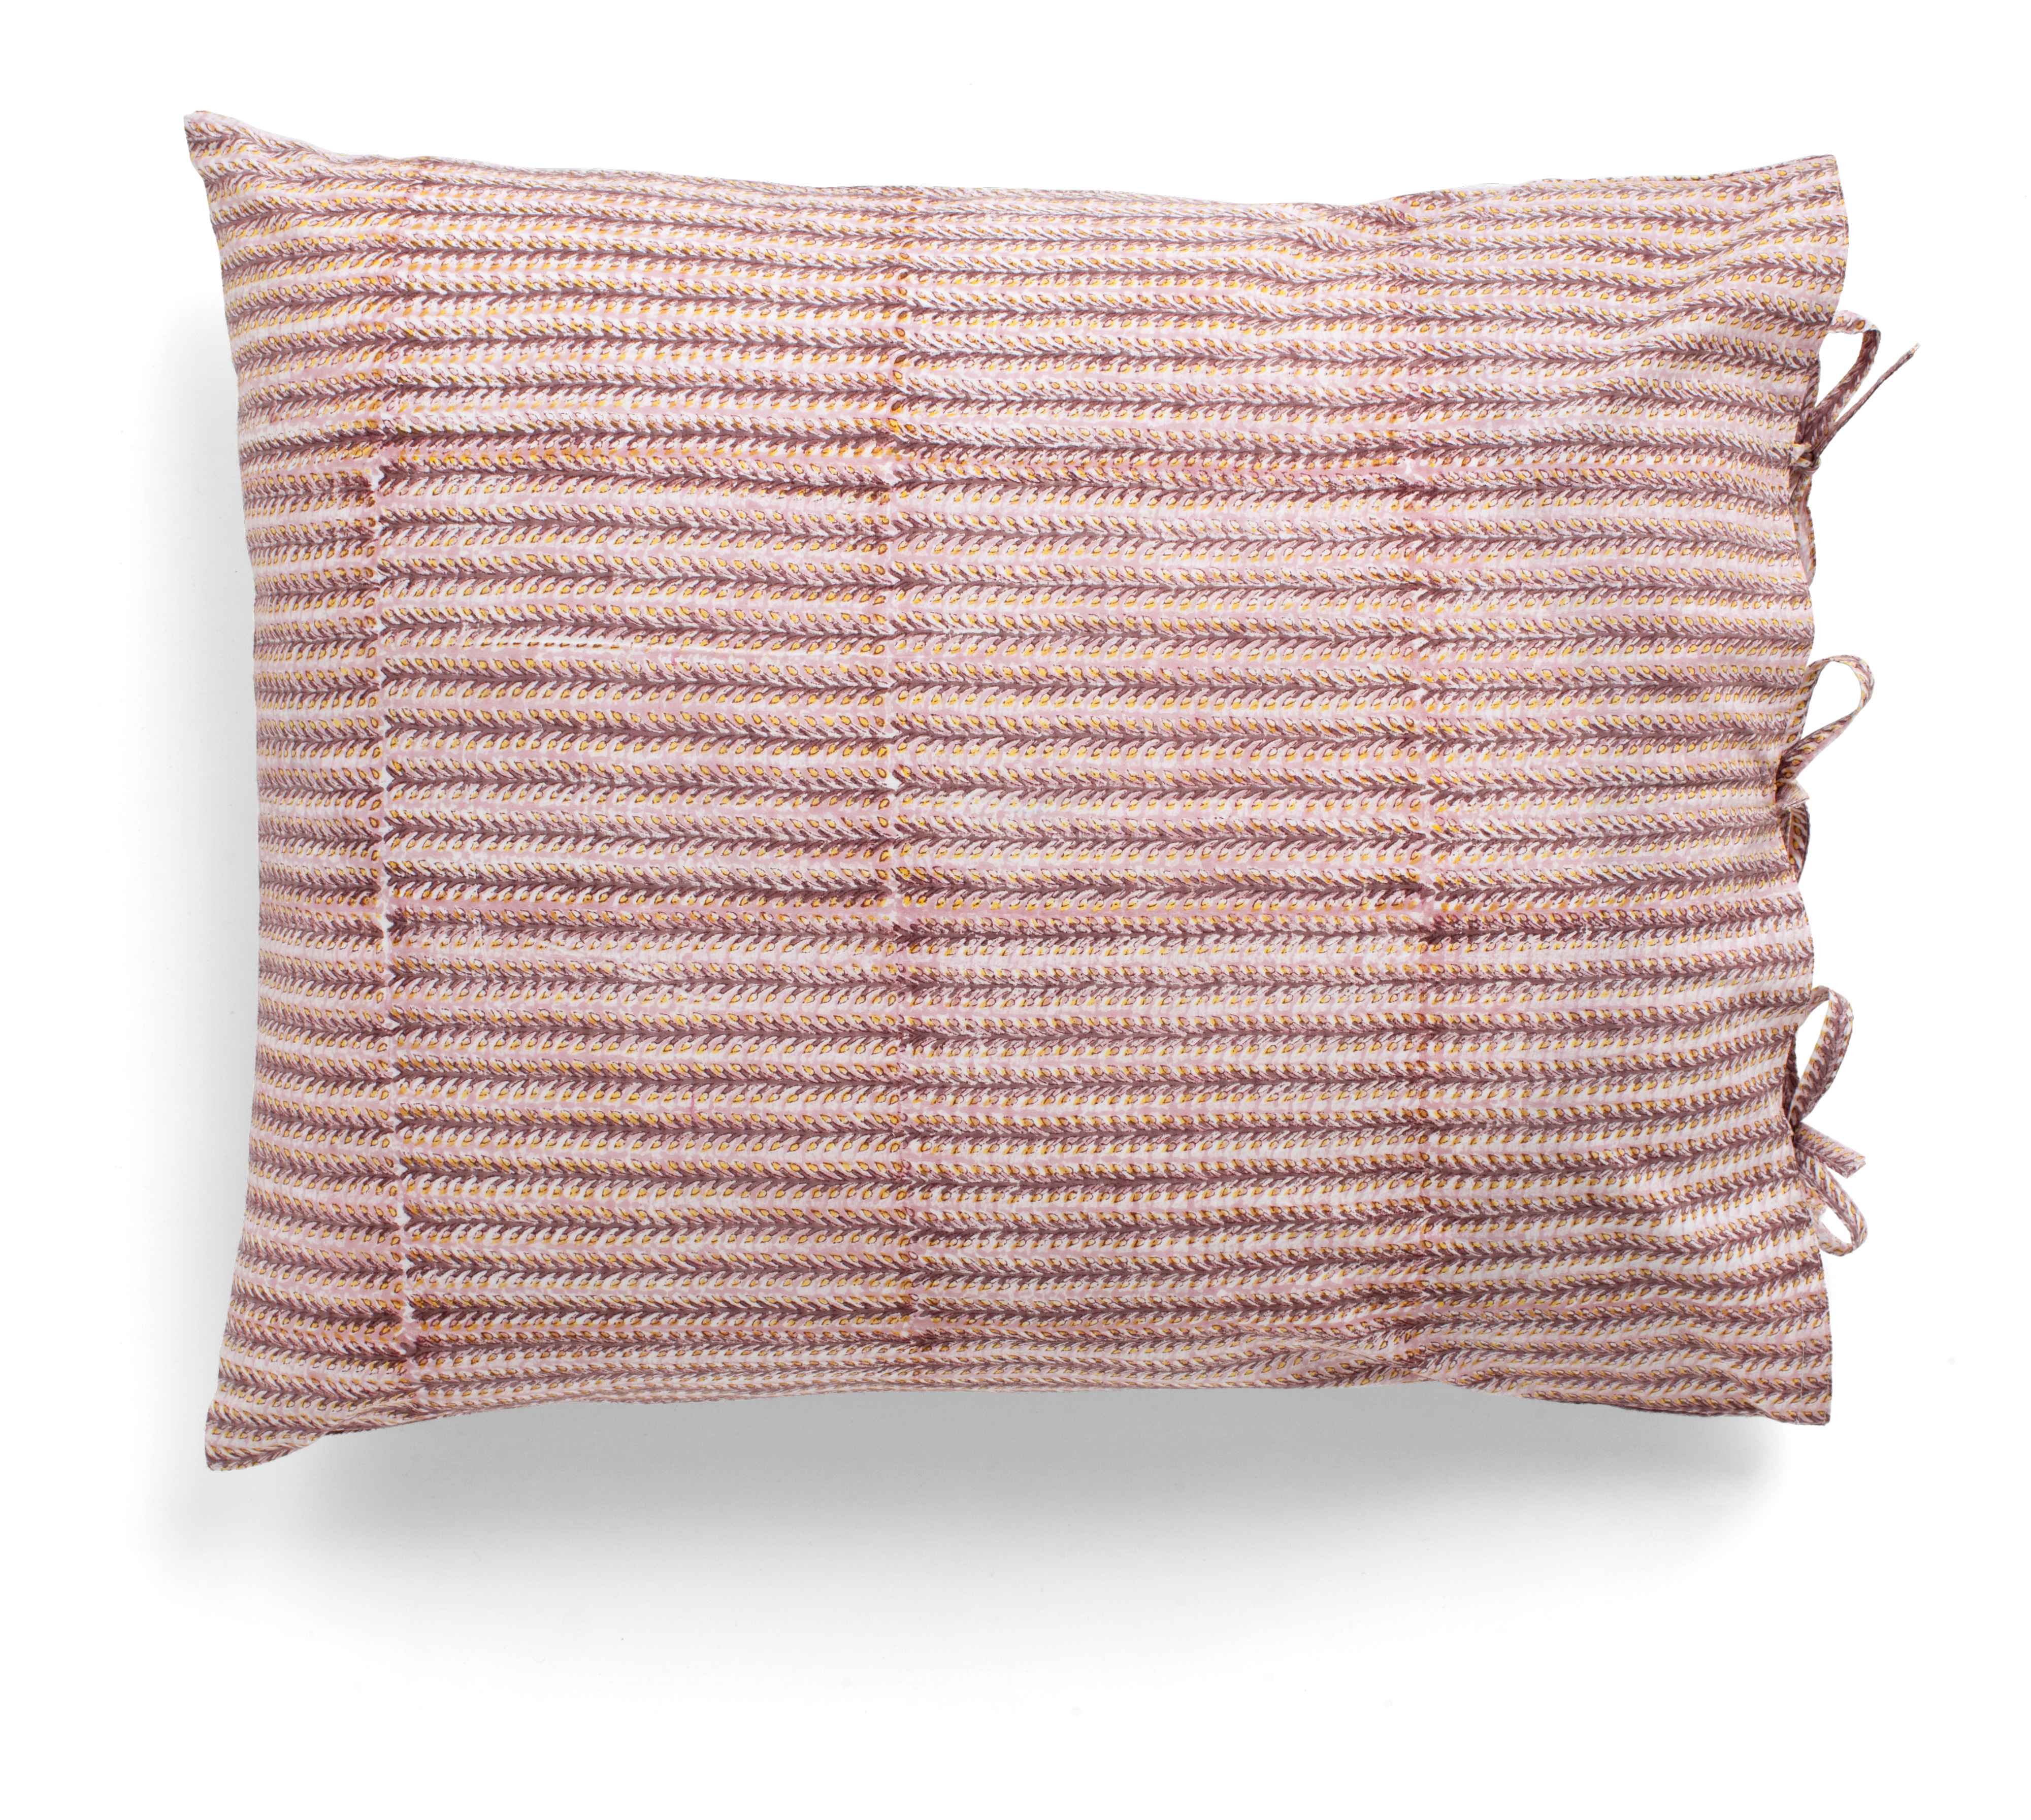 Pillowcase with Leaf print in Fuchsia Rose